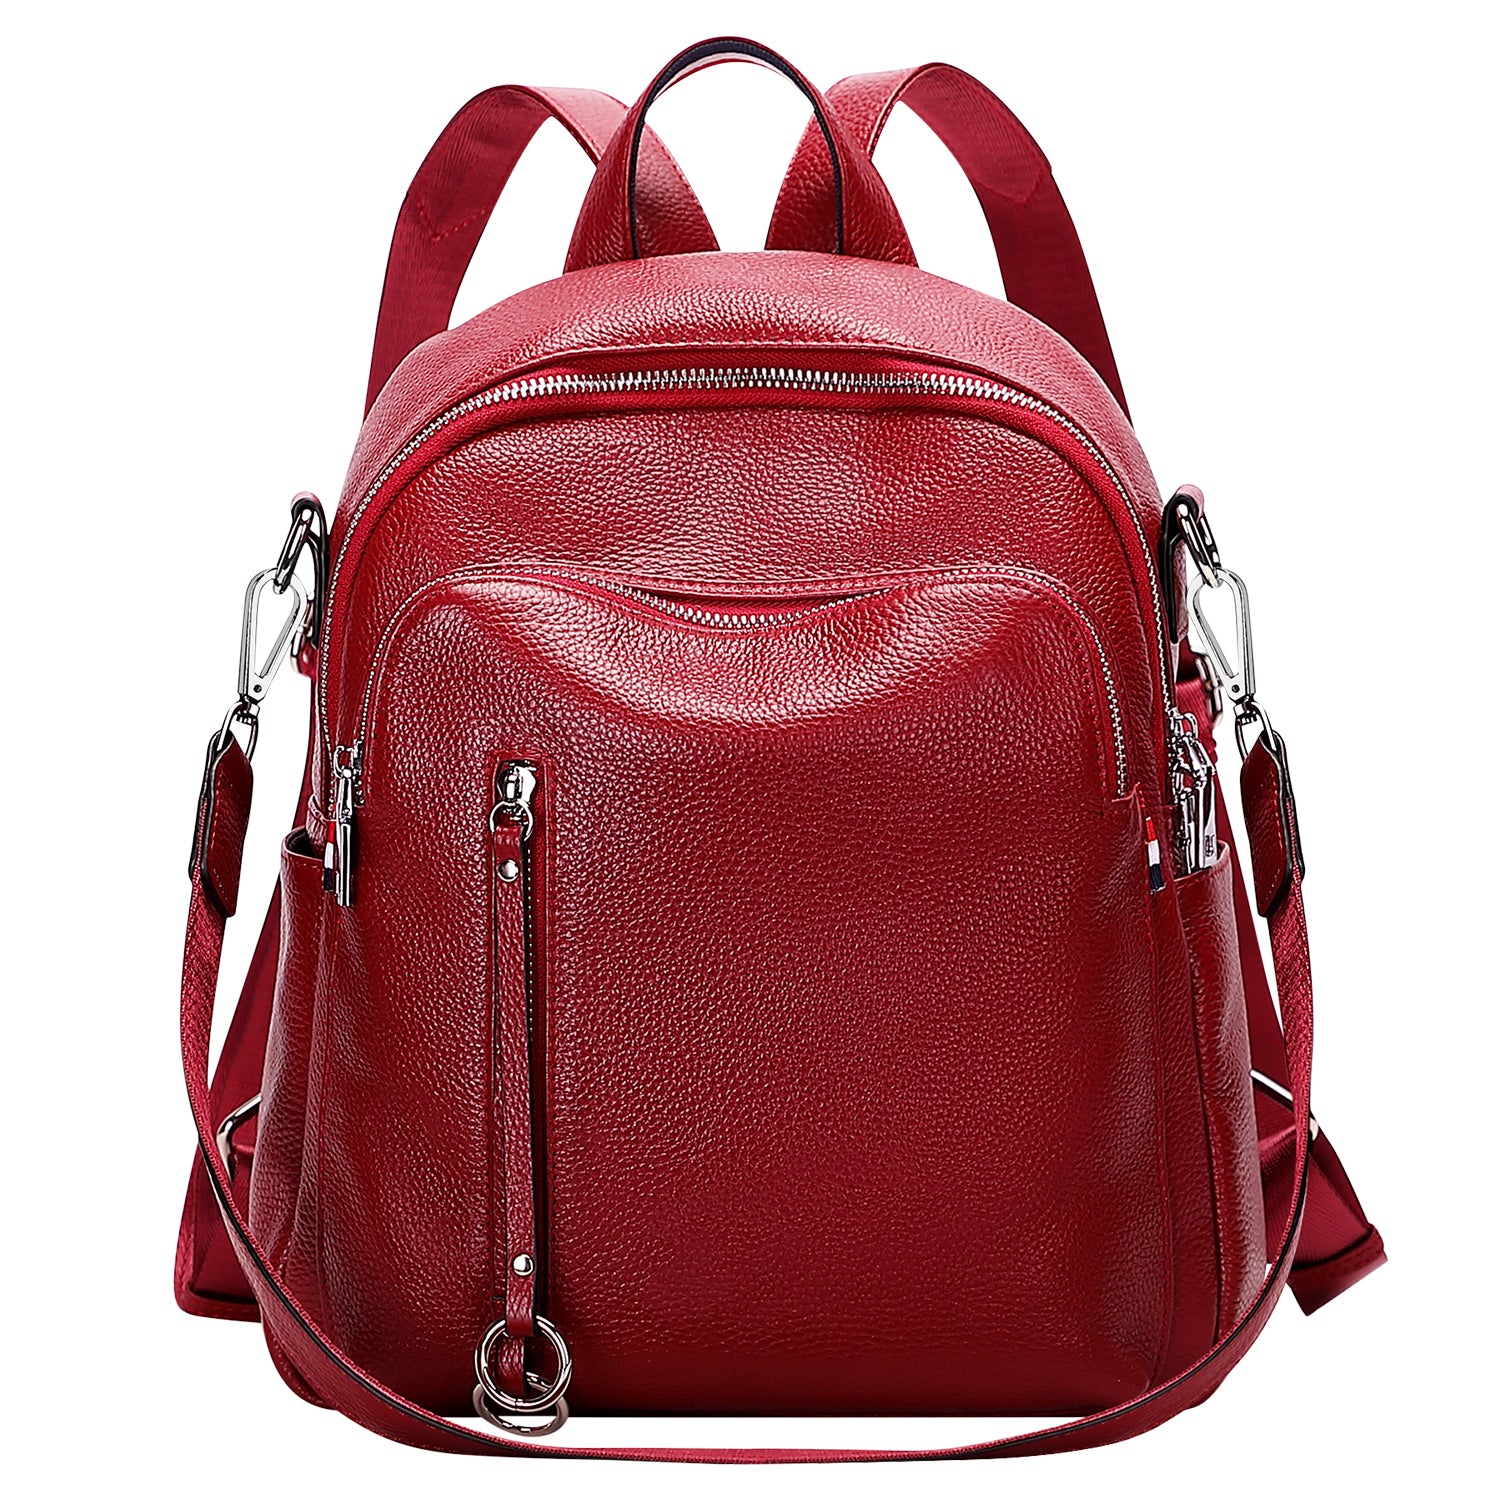 ALTOSY Fashion Genuine Leather Backpack Purse for Women Shoulder